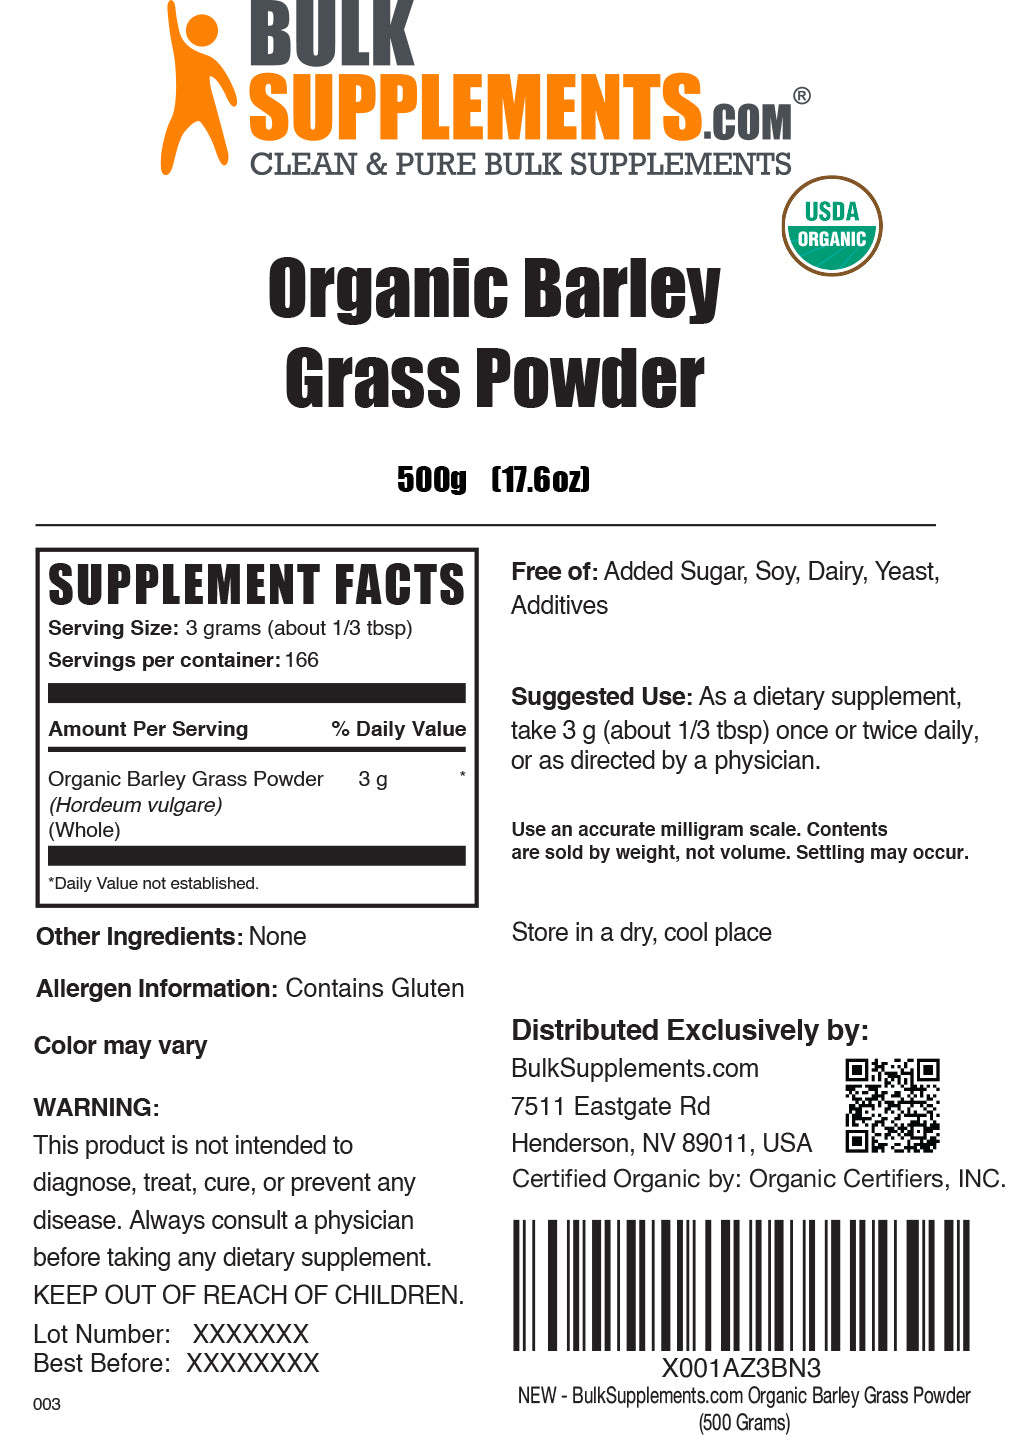 Organic barley grass powder label 500g